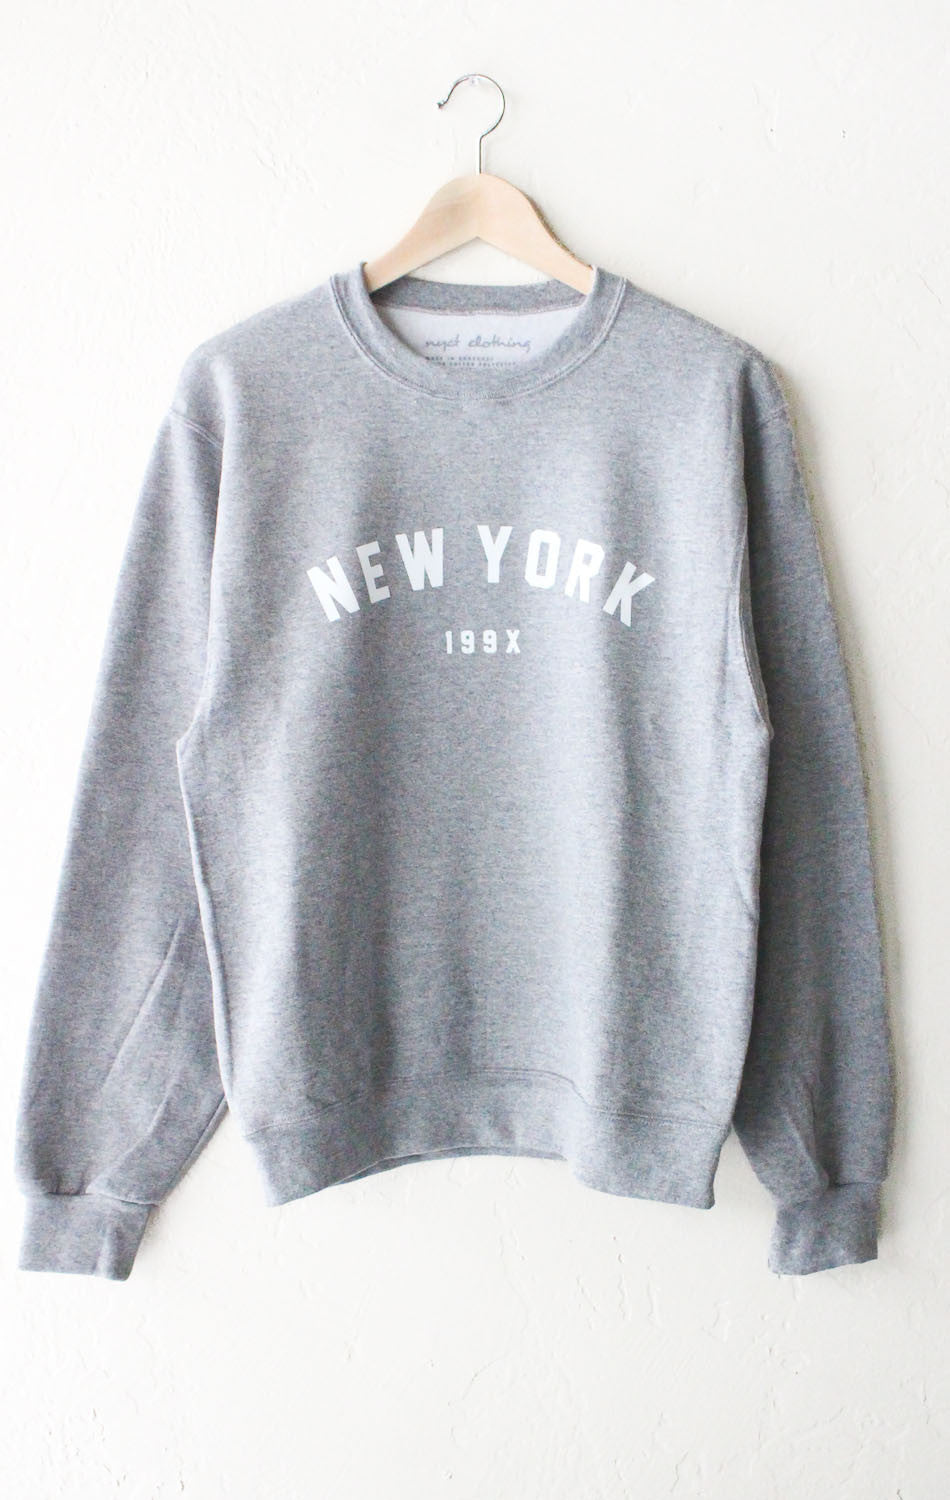 New York 199x Oversized Sweatshirt - Grey - NYCT Clothing